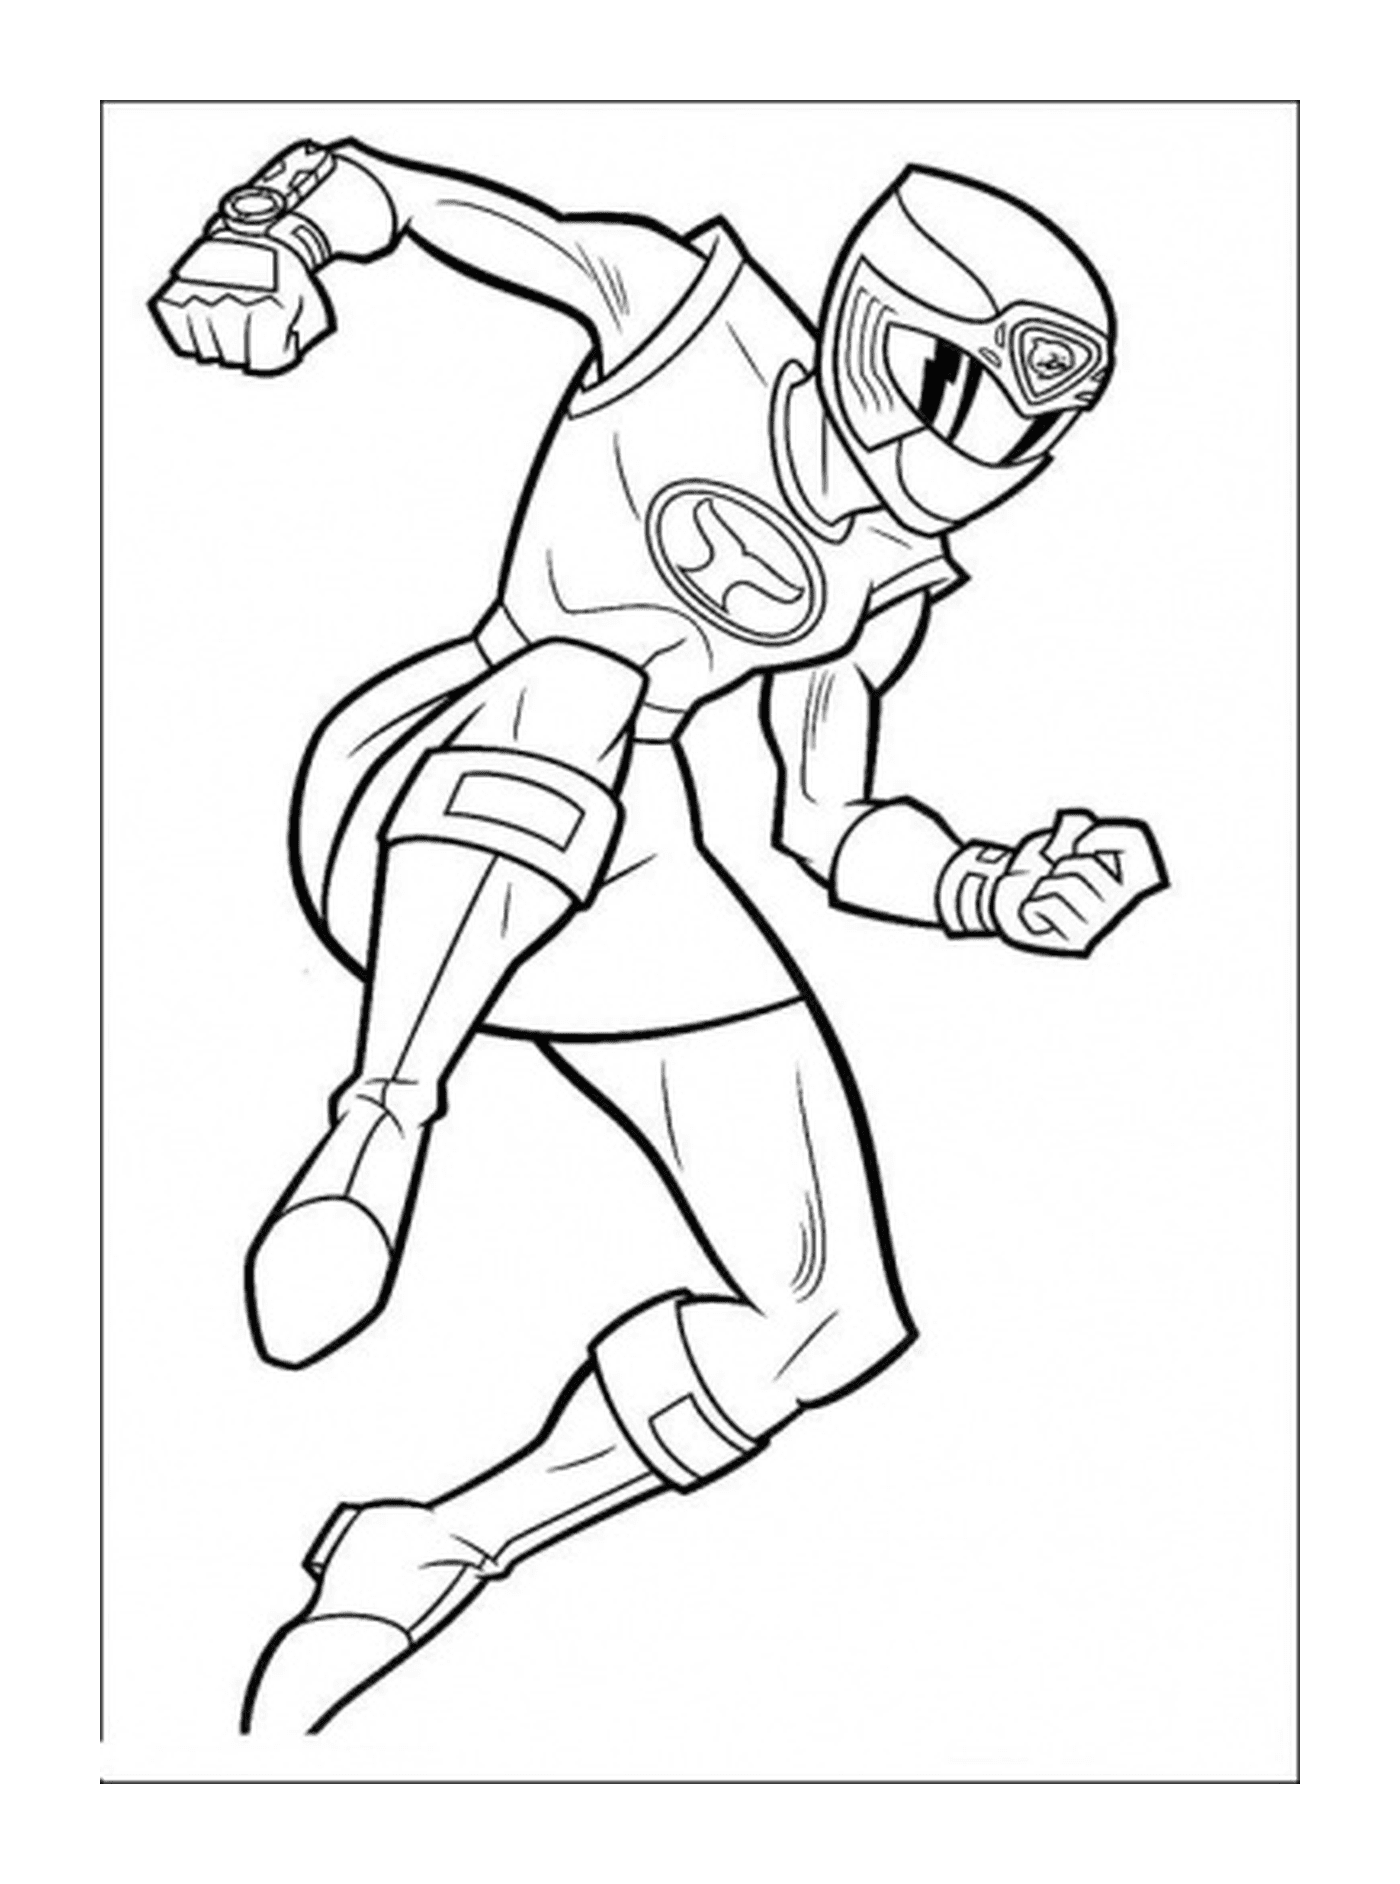  Joven Power Ranger chica haciendo un salto gigante 